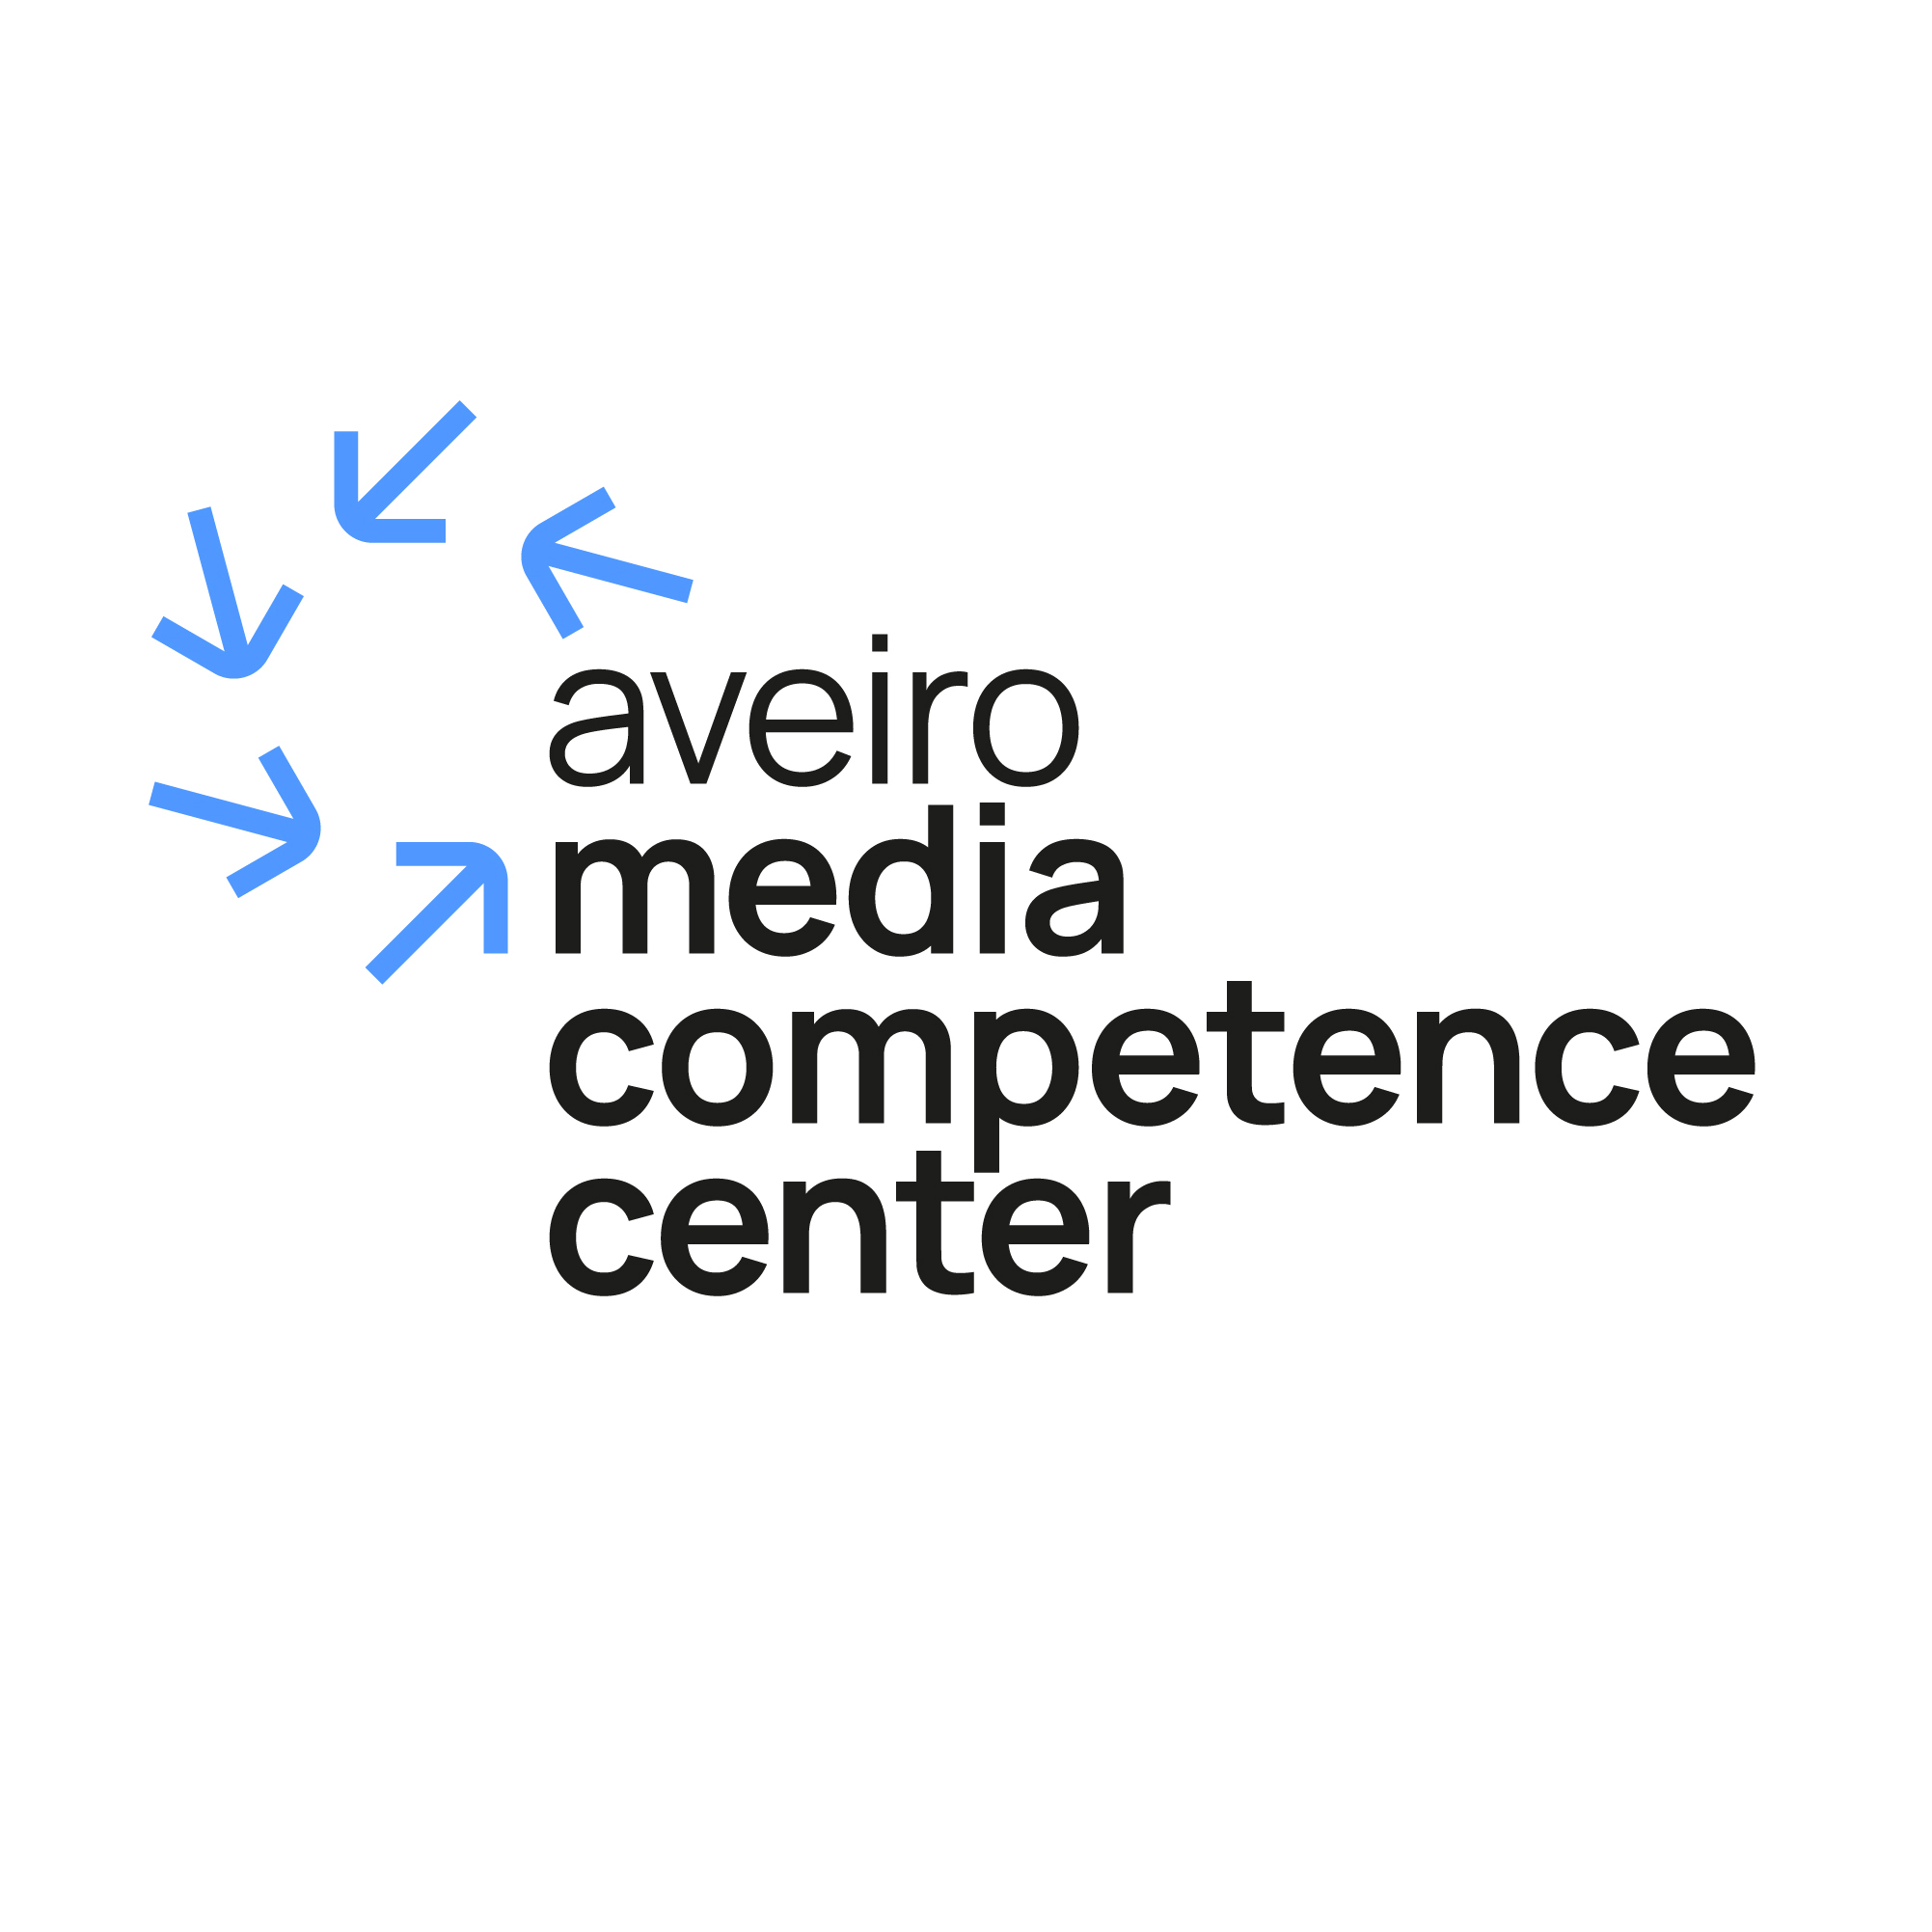 AMCC Aveiro Media Competence Center